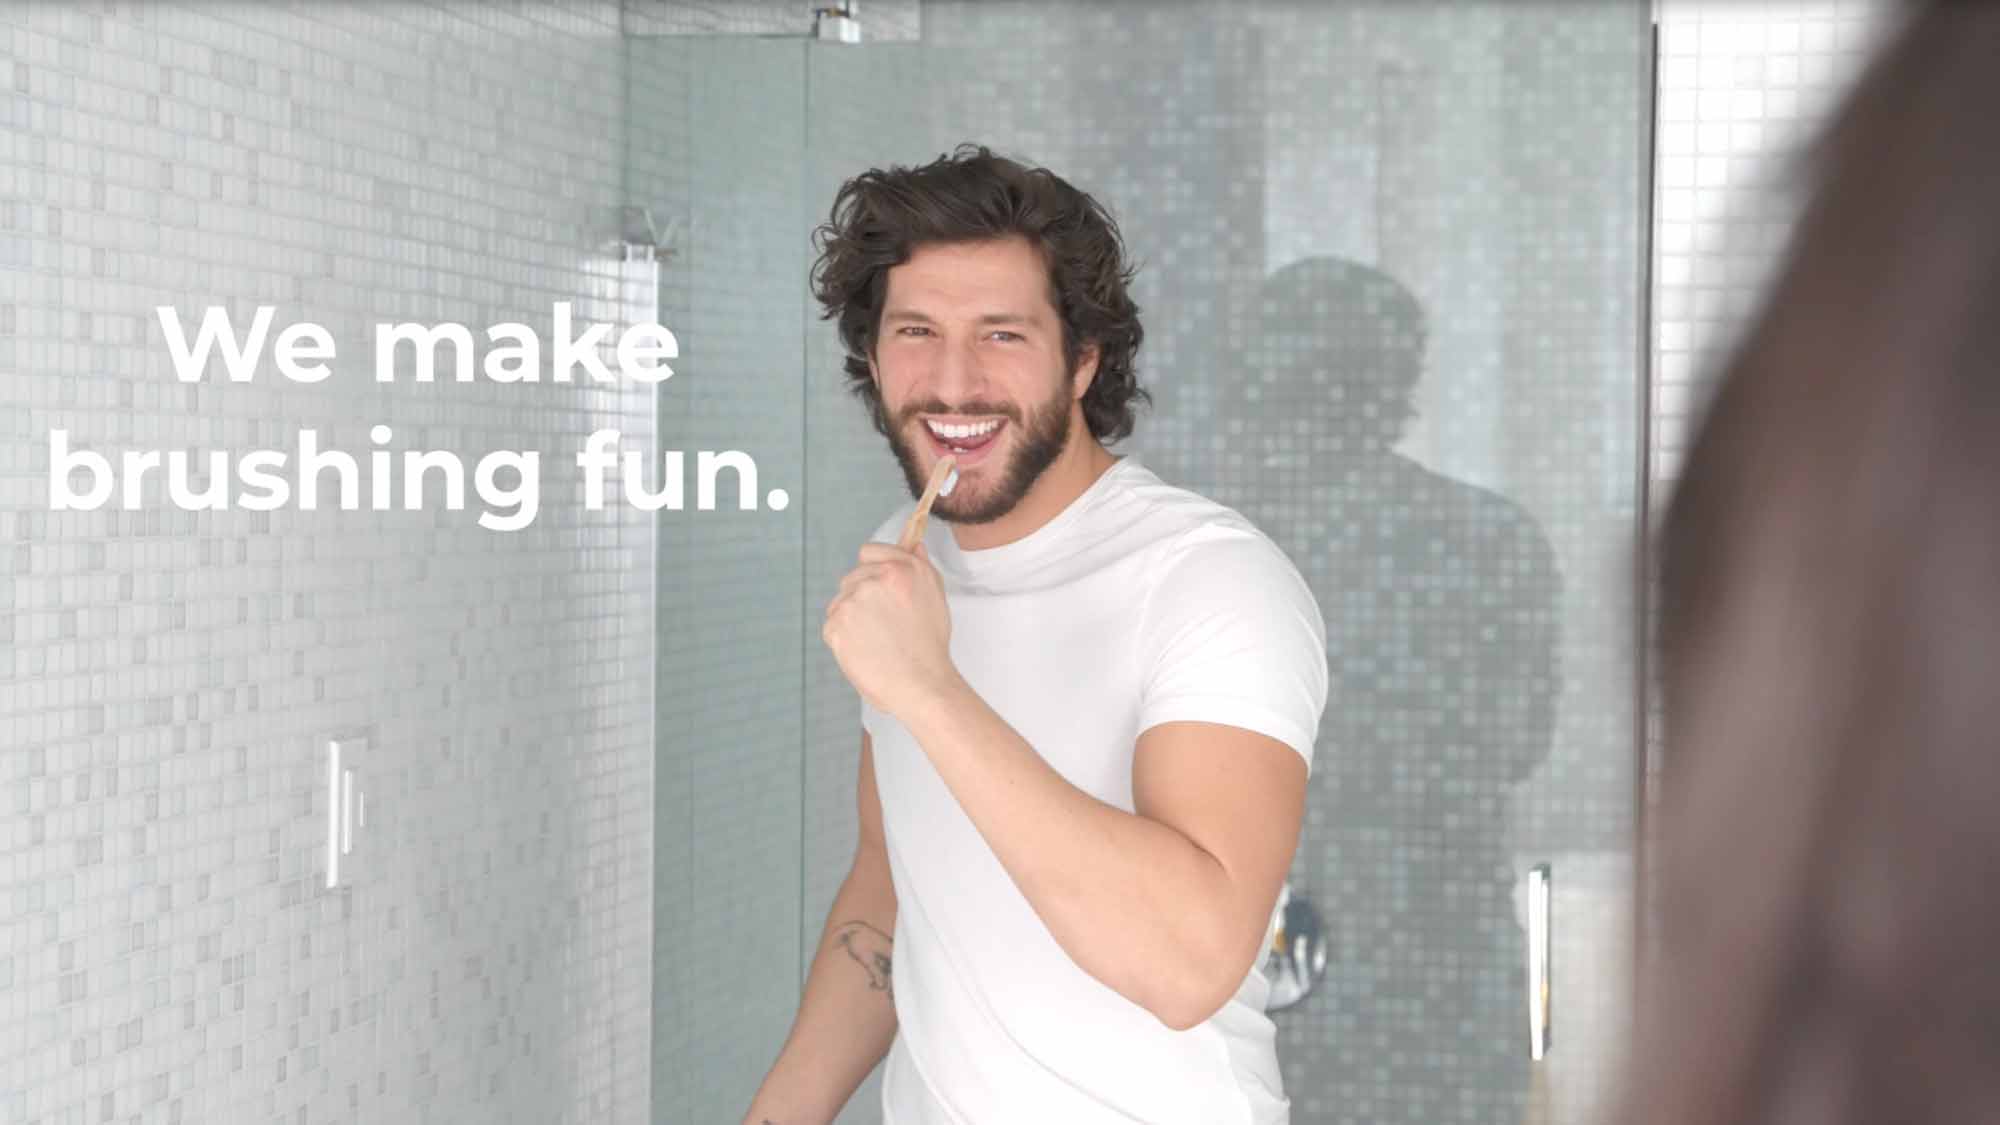 guy-in-bathroom-singing-using-toothbrush-as-a-mic-with-the-words-we-make-brushing-fun-oxyfresh.jpg